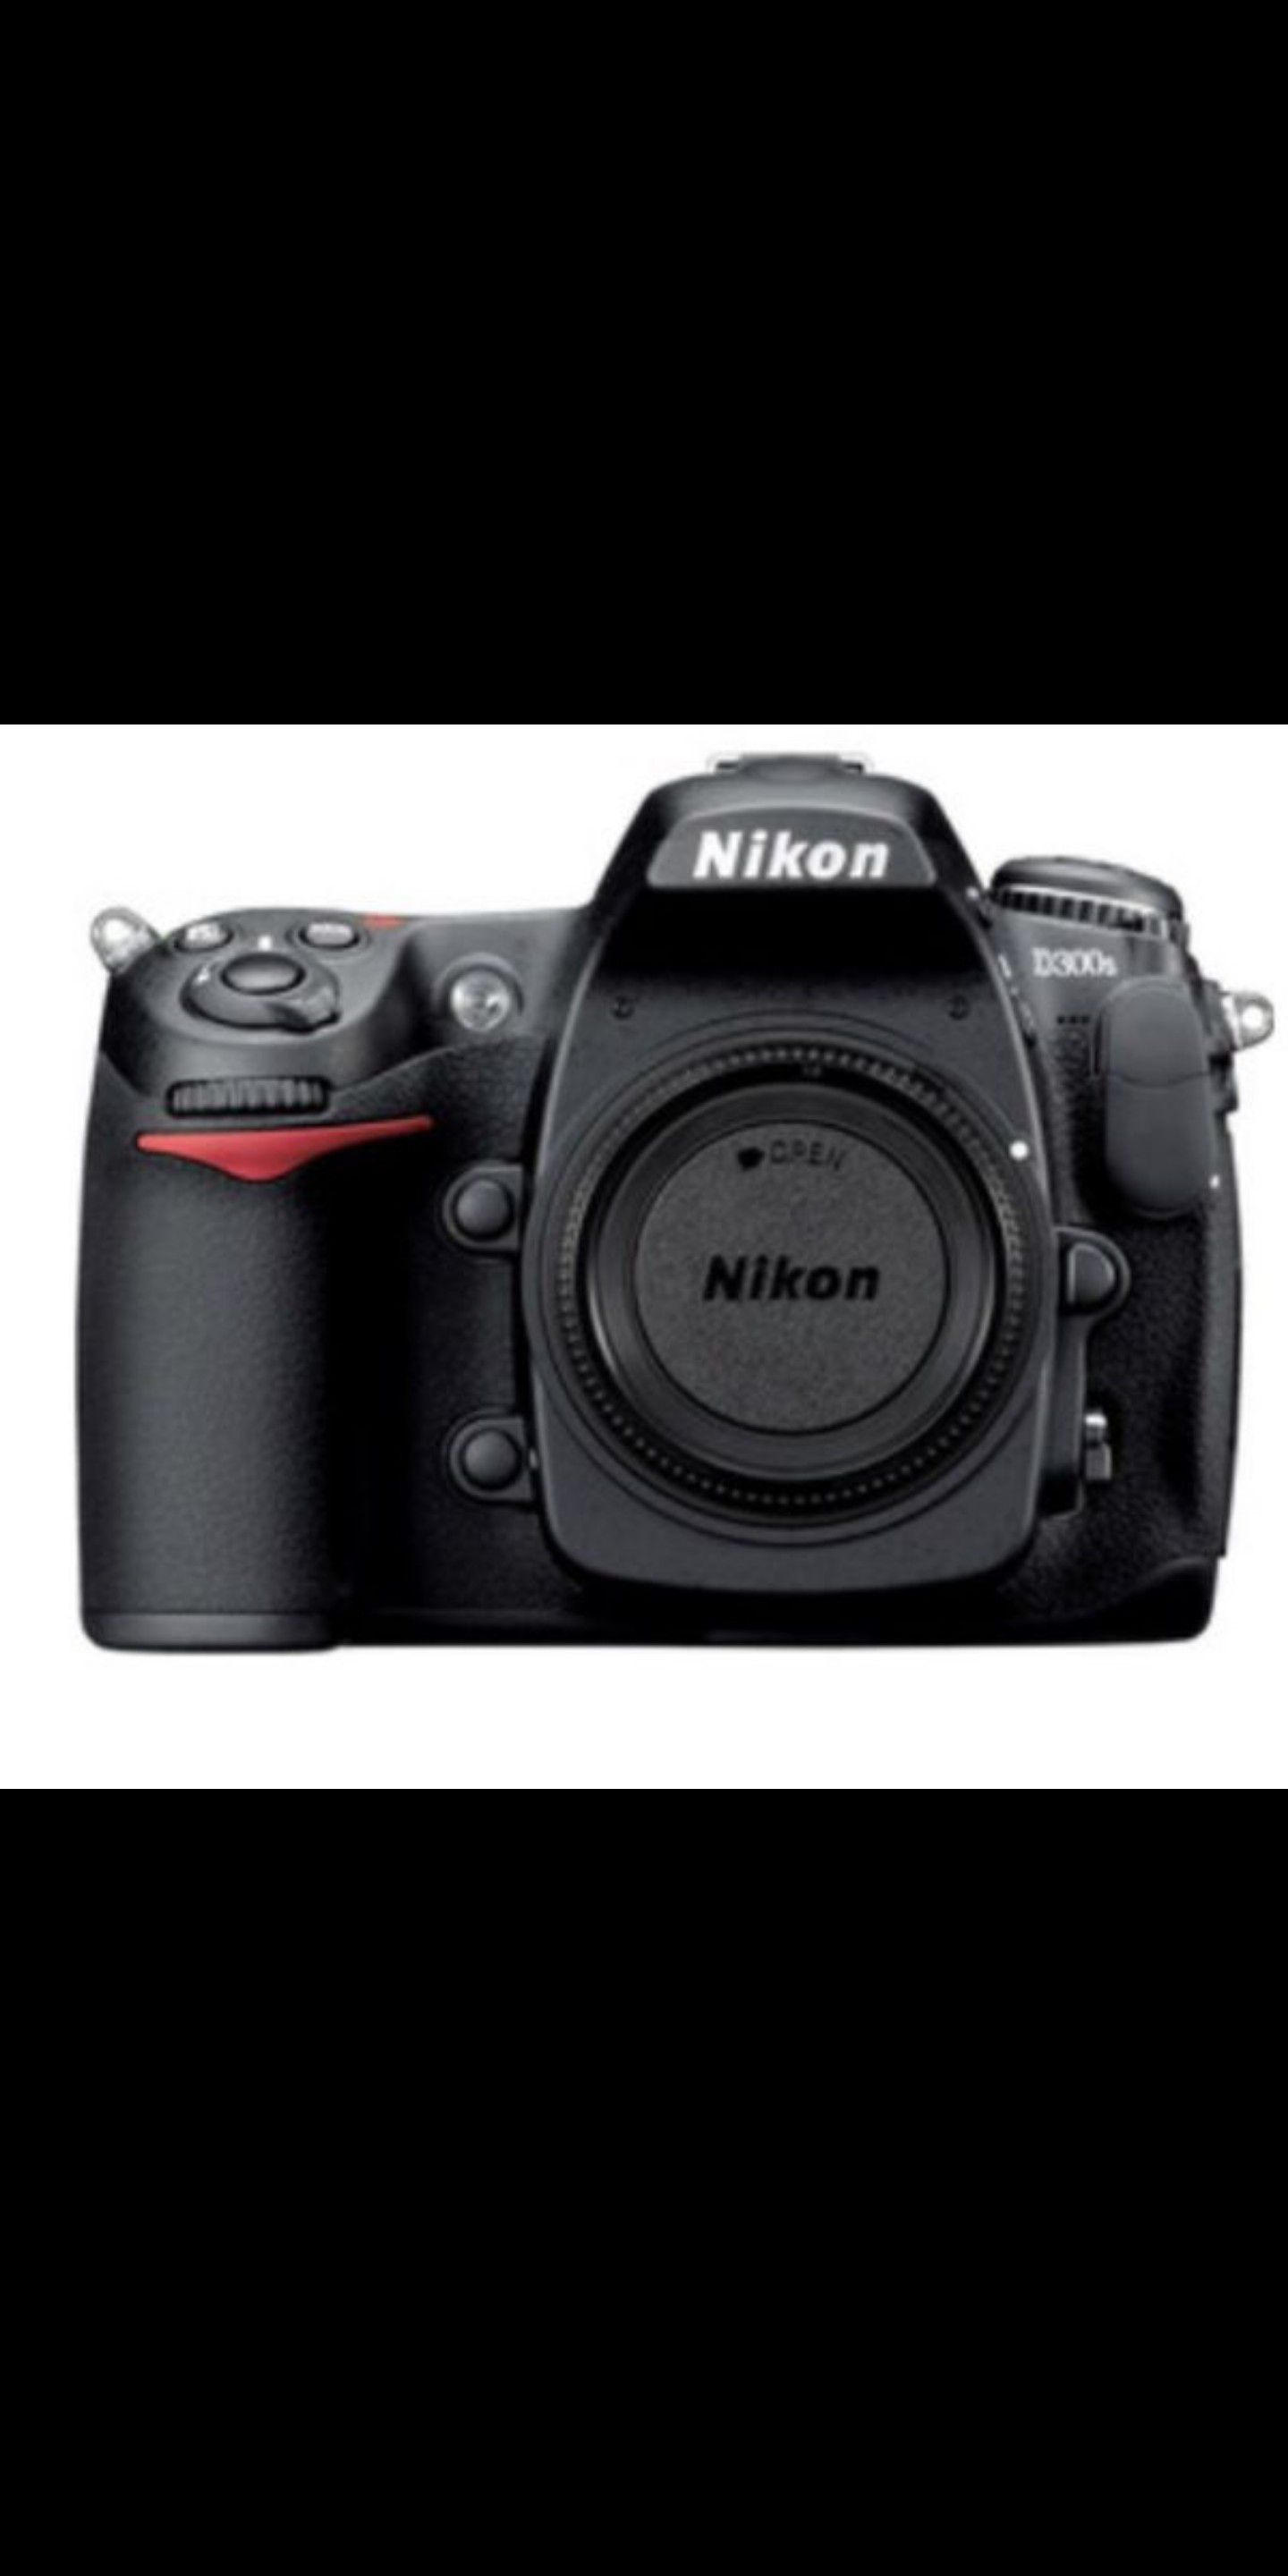 Nikon d300s with nikon 18-200 be lense with box